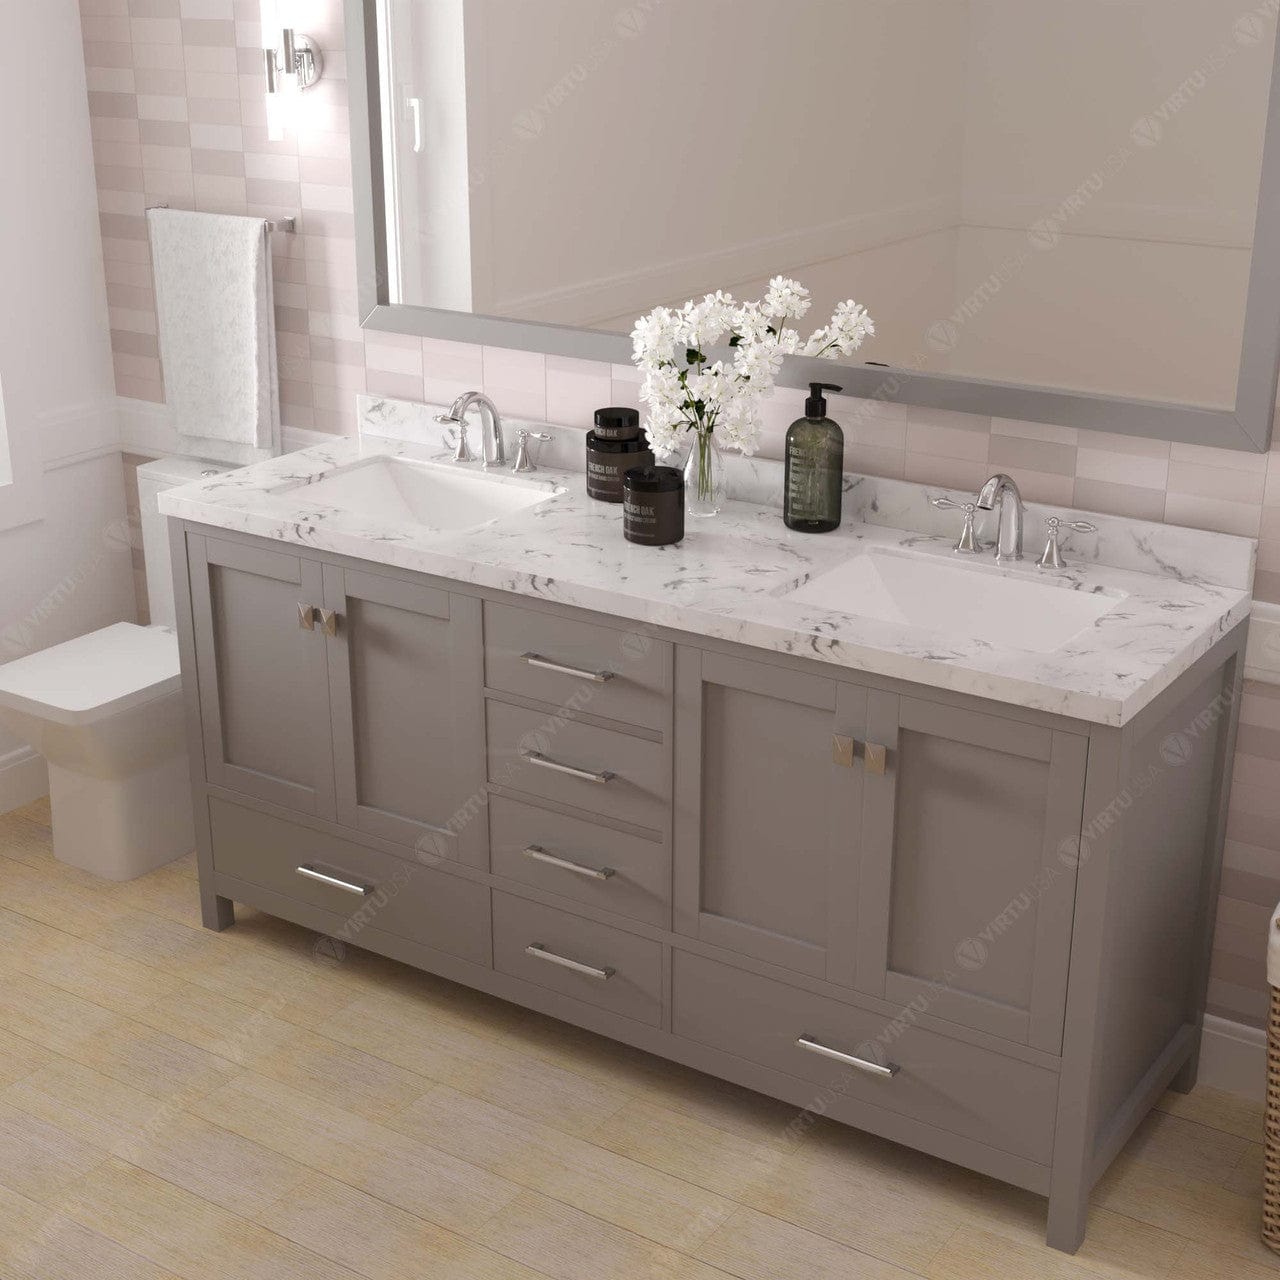 Caroline Avenue 72" Double Bathroom Vanity in Gray with Quartz Countertop side view